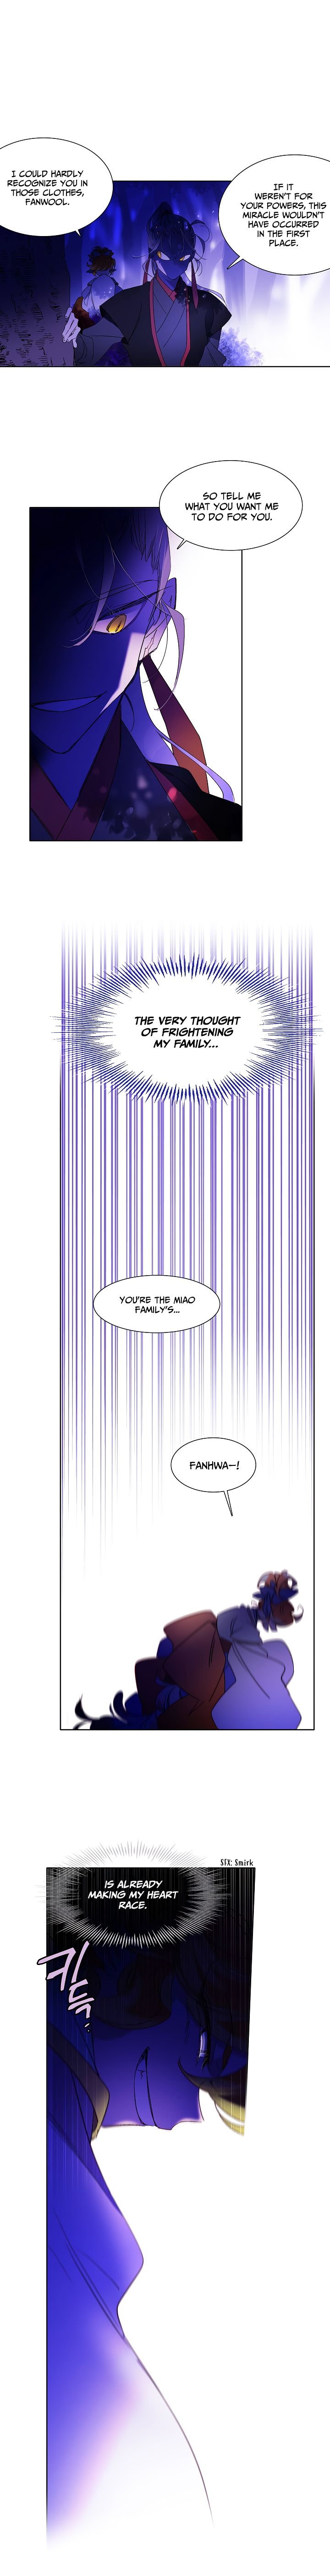 Aewol's Dream - Page 2